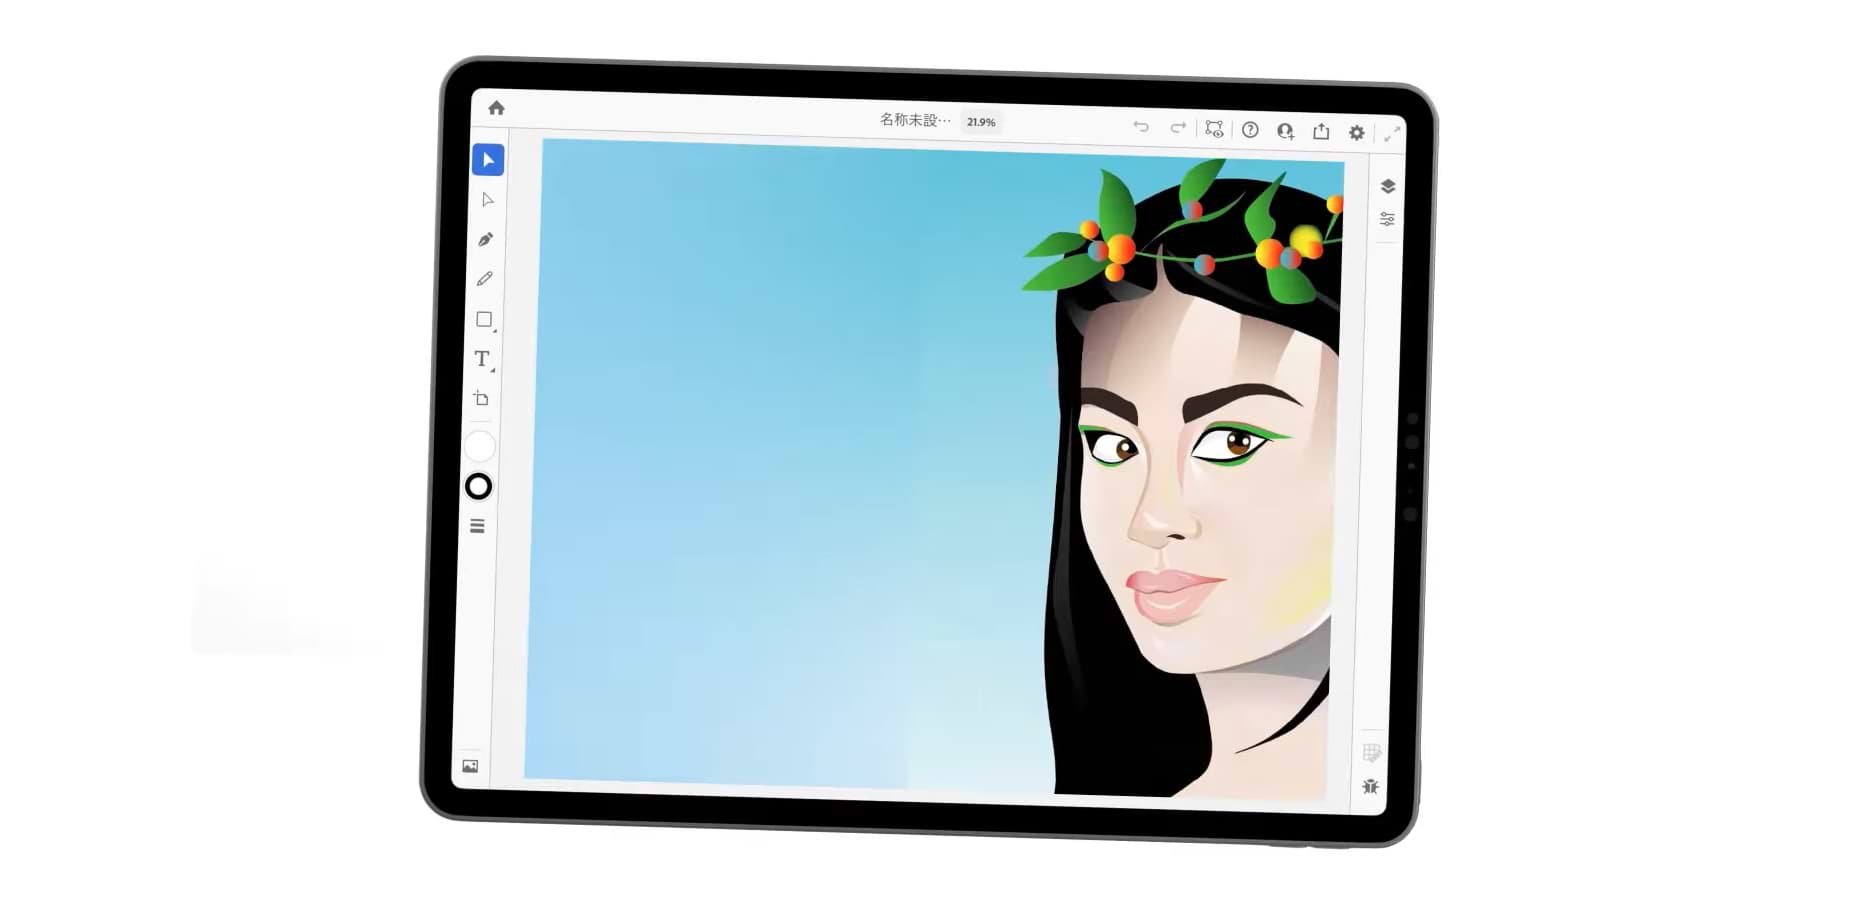 Adobe Illustrator App for iPad Launching This October